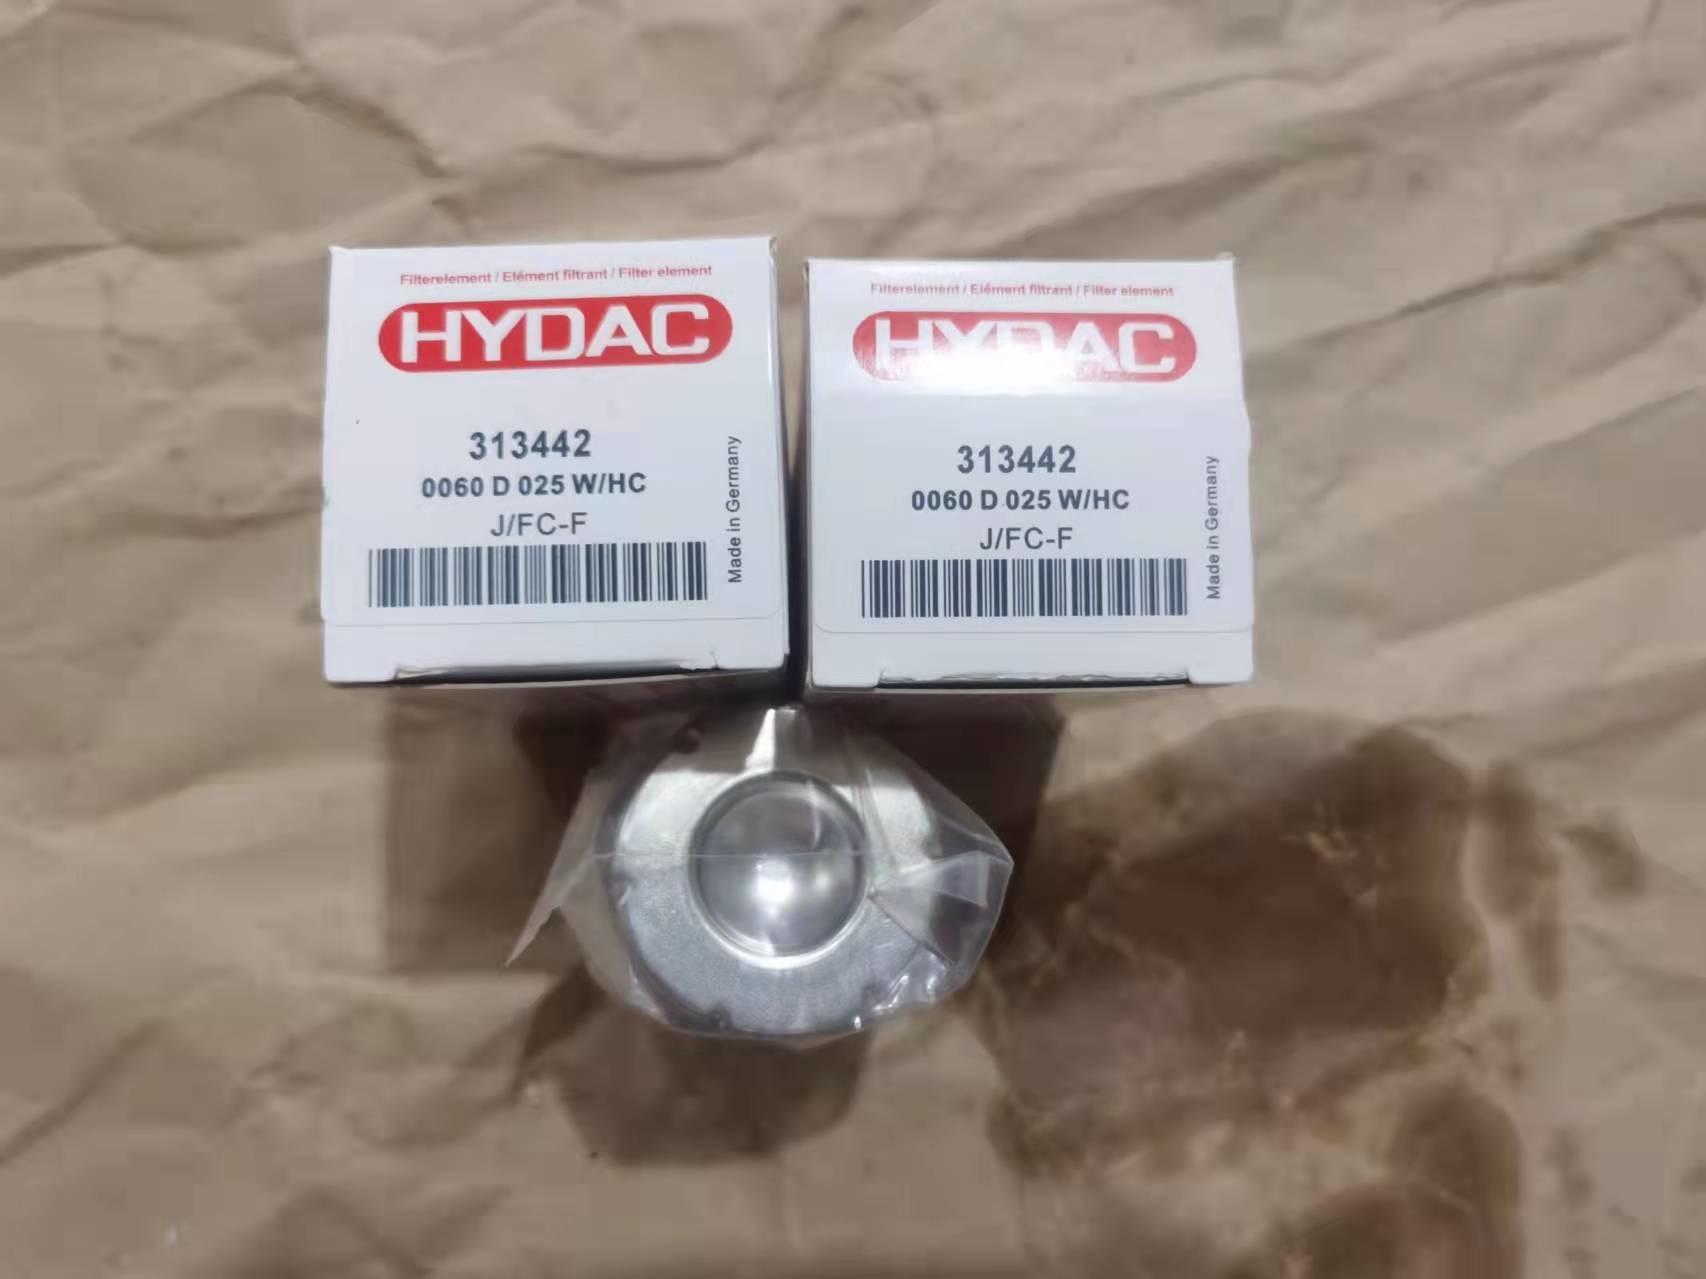 Hydac 313442 0060D025W/HC Pressure Filter Element for sale